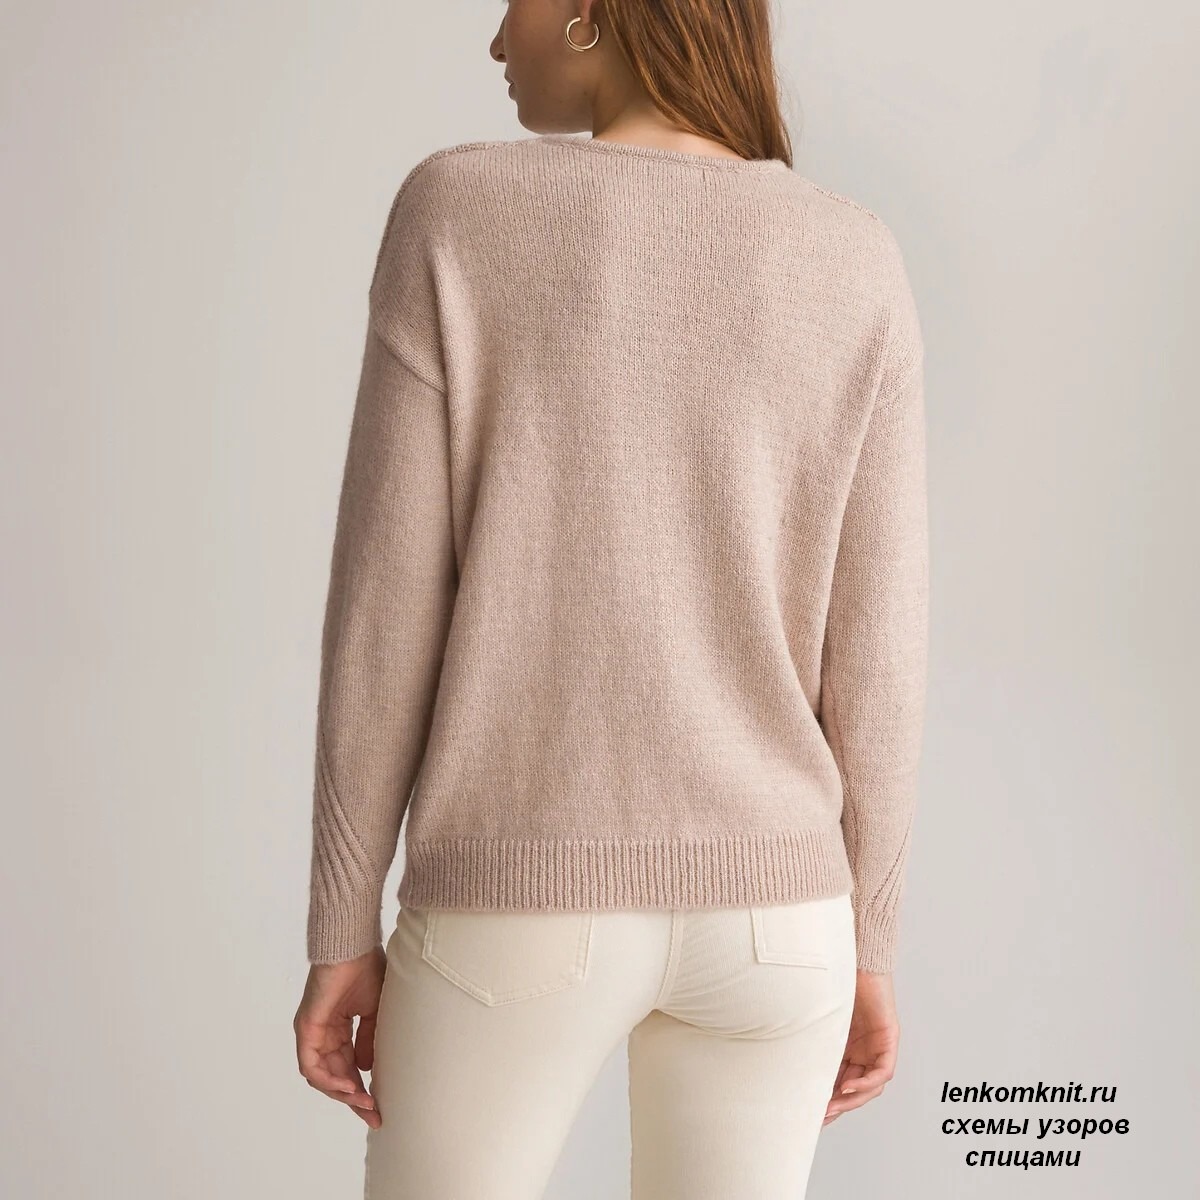 Пуловер La Redoute. Схемы узоров